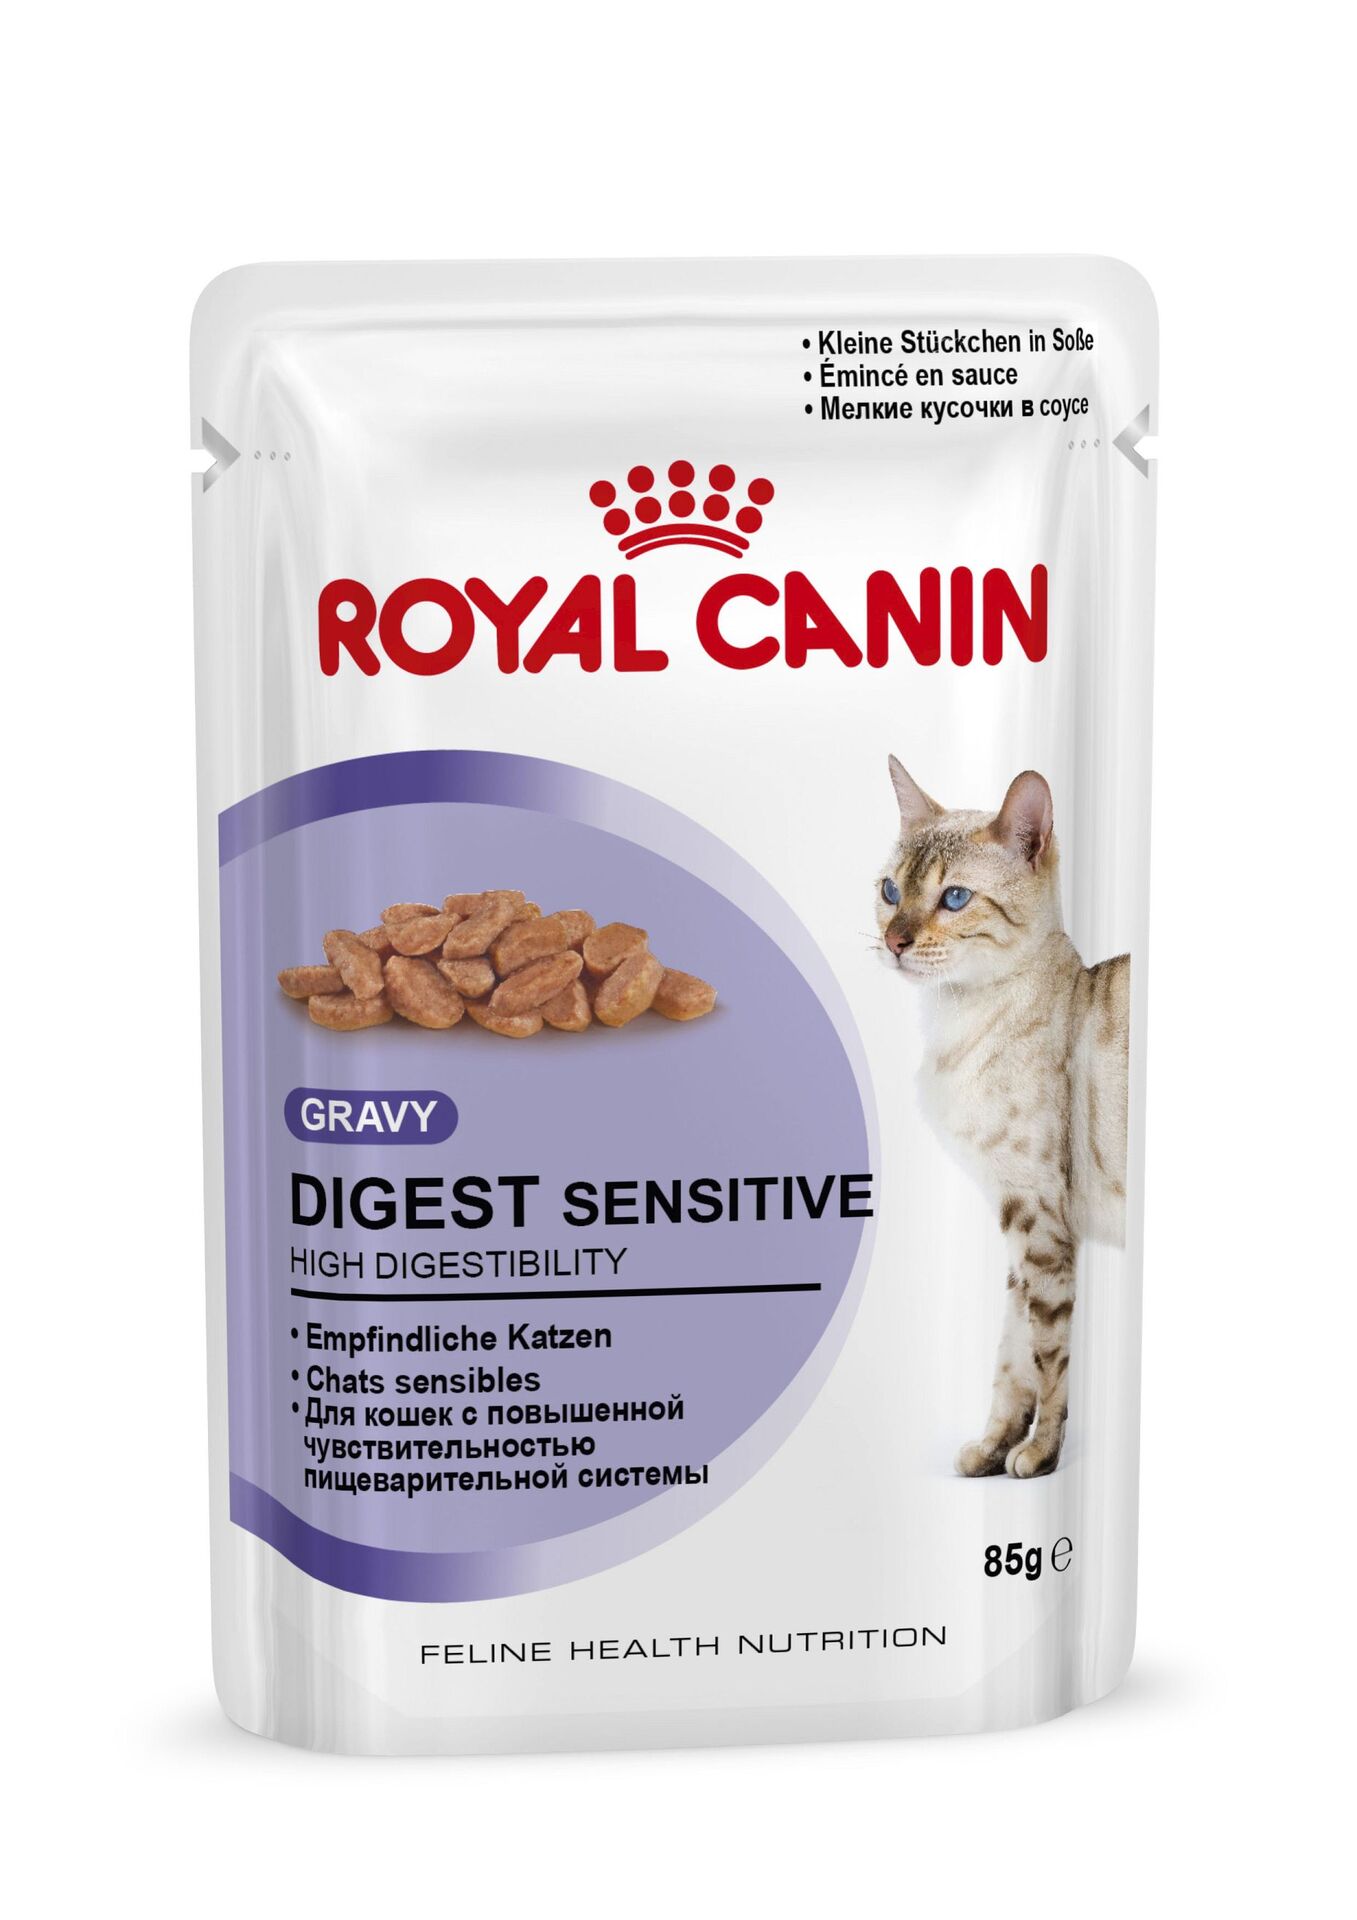 Feline P.B. Health Nutr. Digest Sensitive 85g